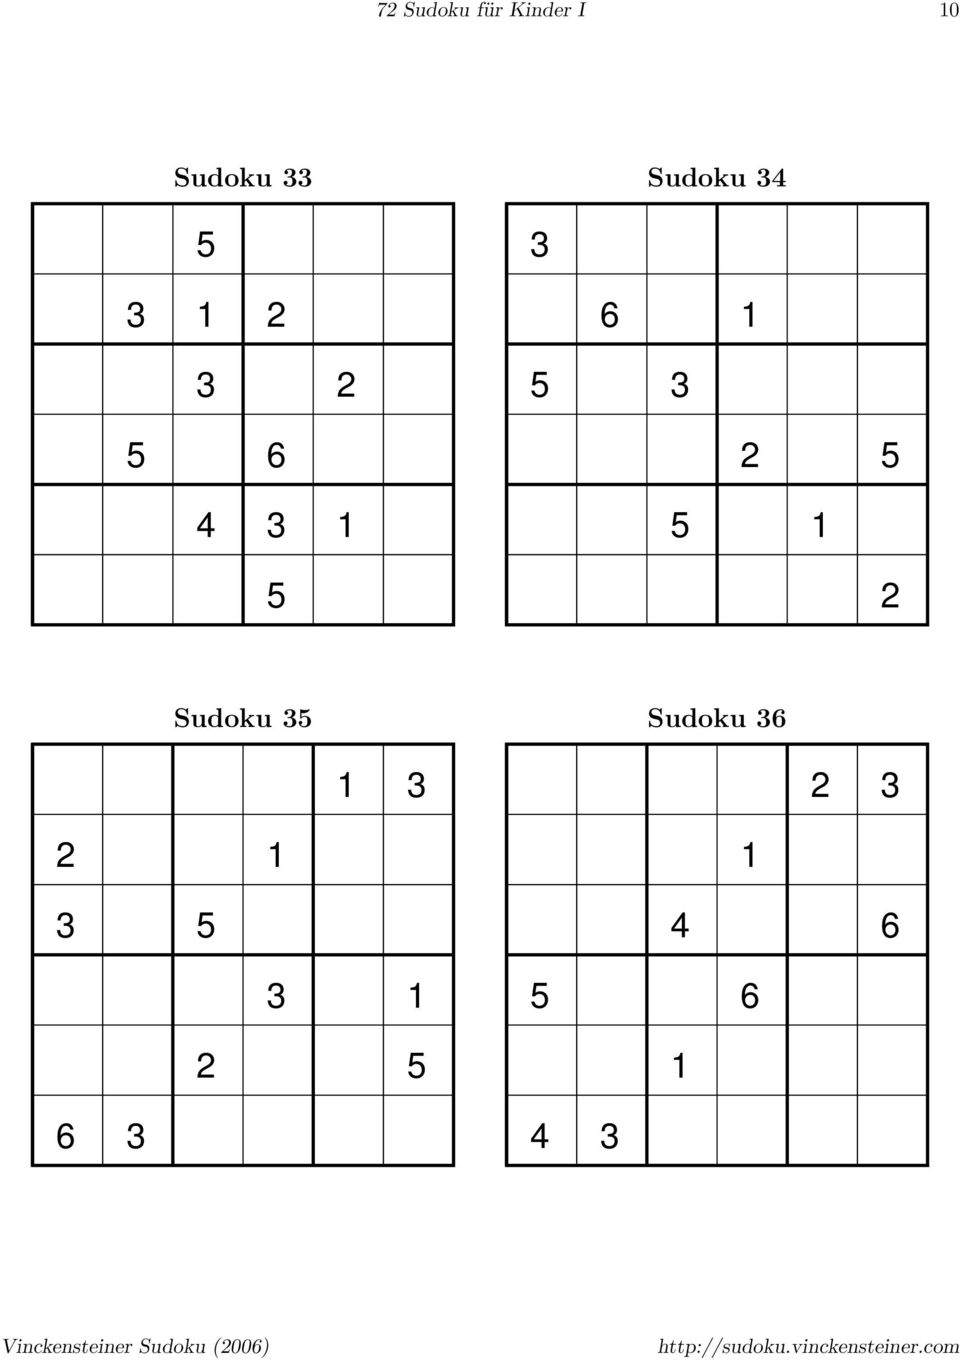 5 6 3 5 6 5 3 5 5 Sudoku 35